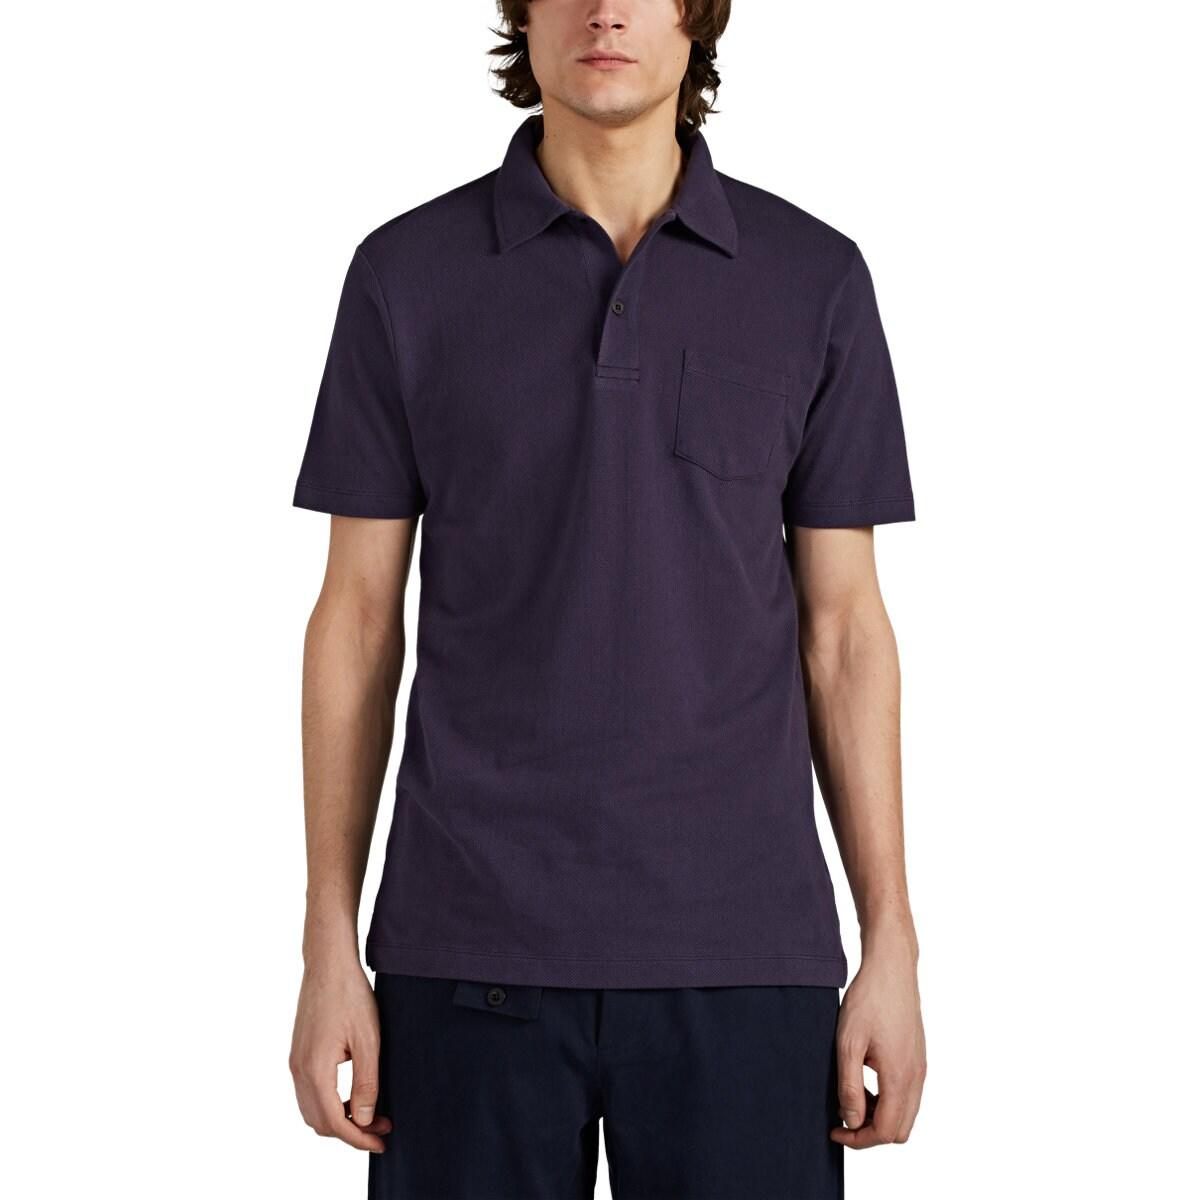 Sunspel Mesh-knit Cotton Polo Shirt in Purple for Men - Lyst